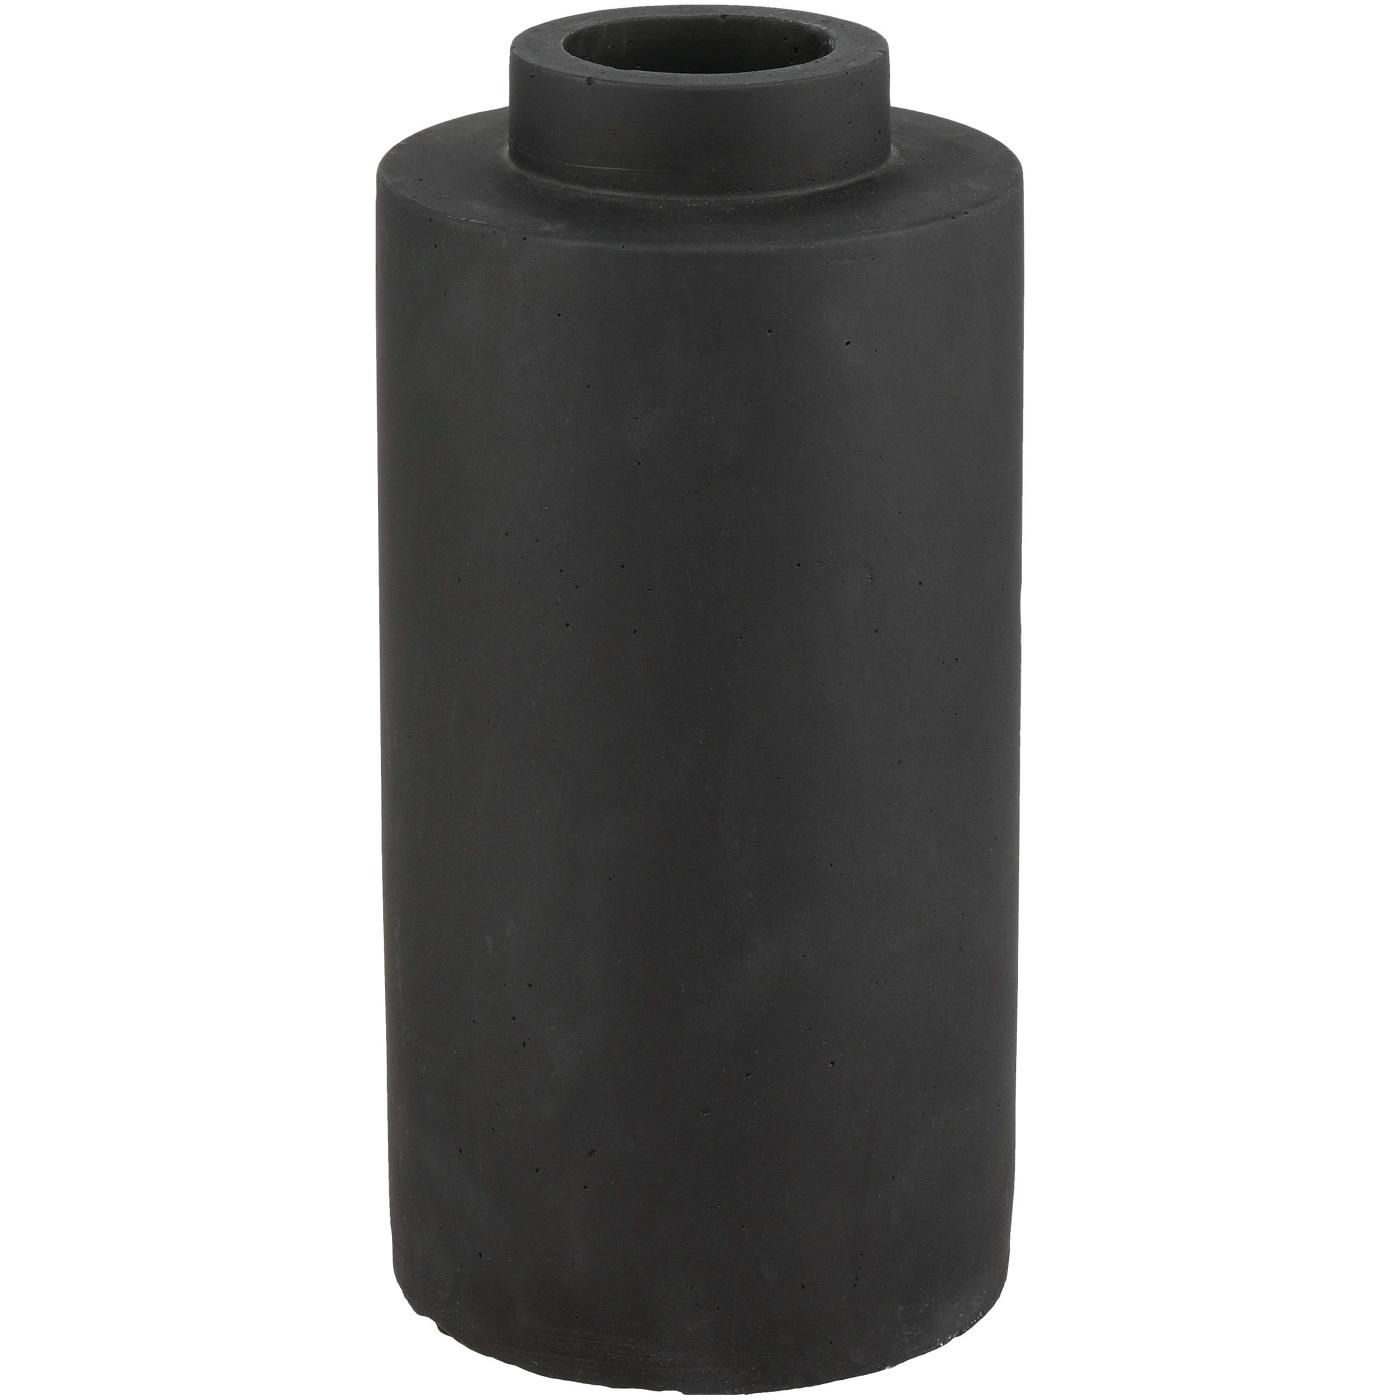 Haven + Key Decorative Ceramic Vase – Black; image 1 of 2